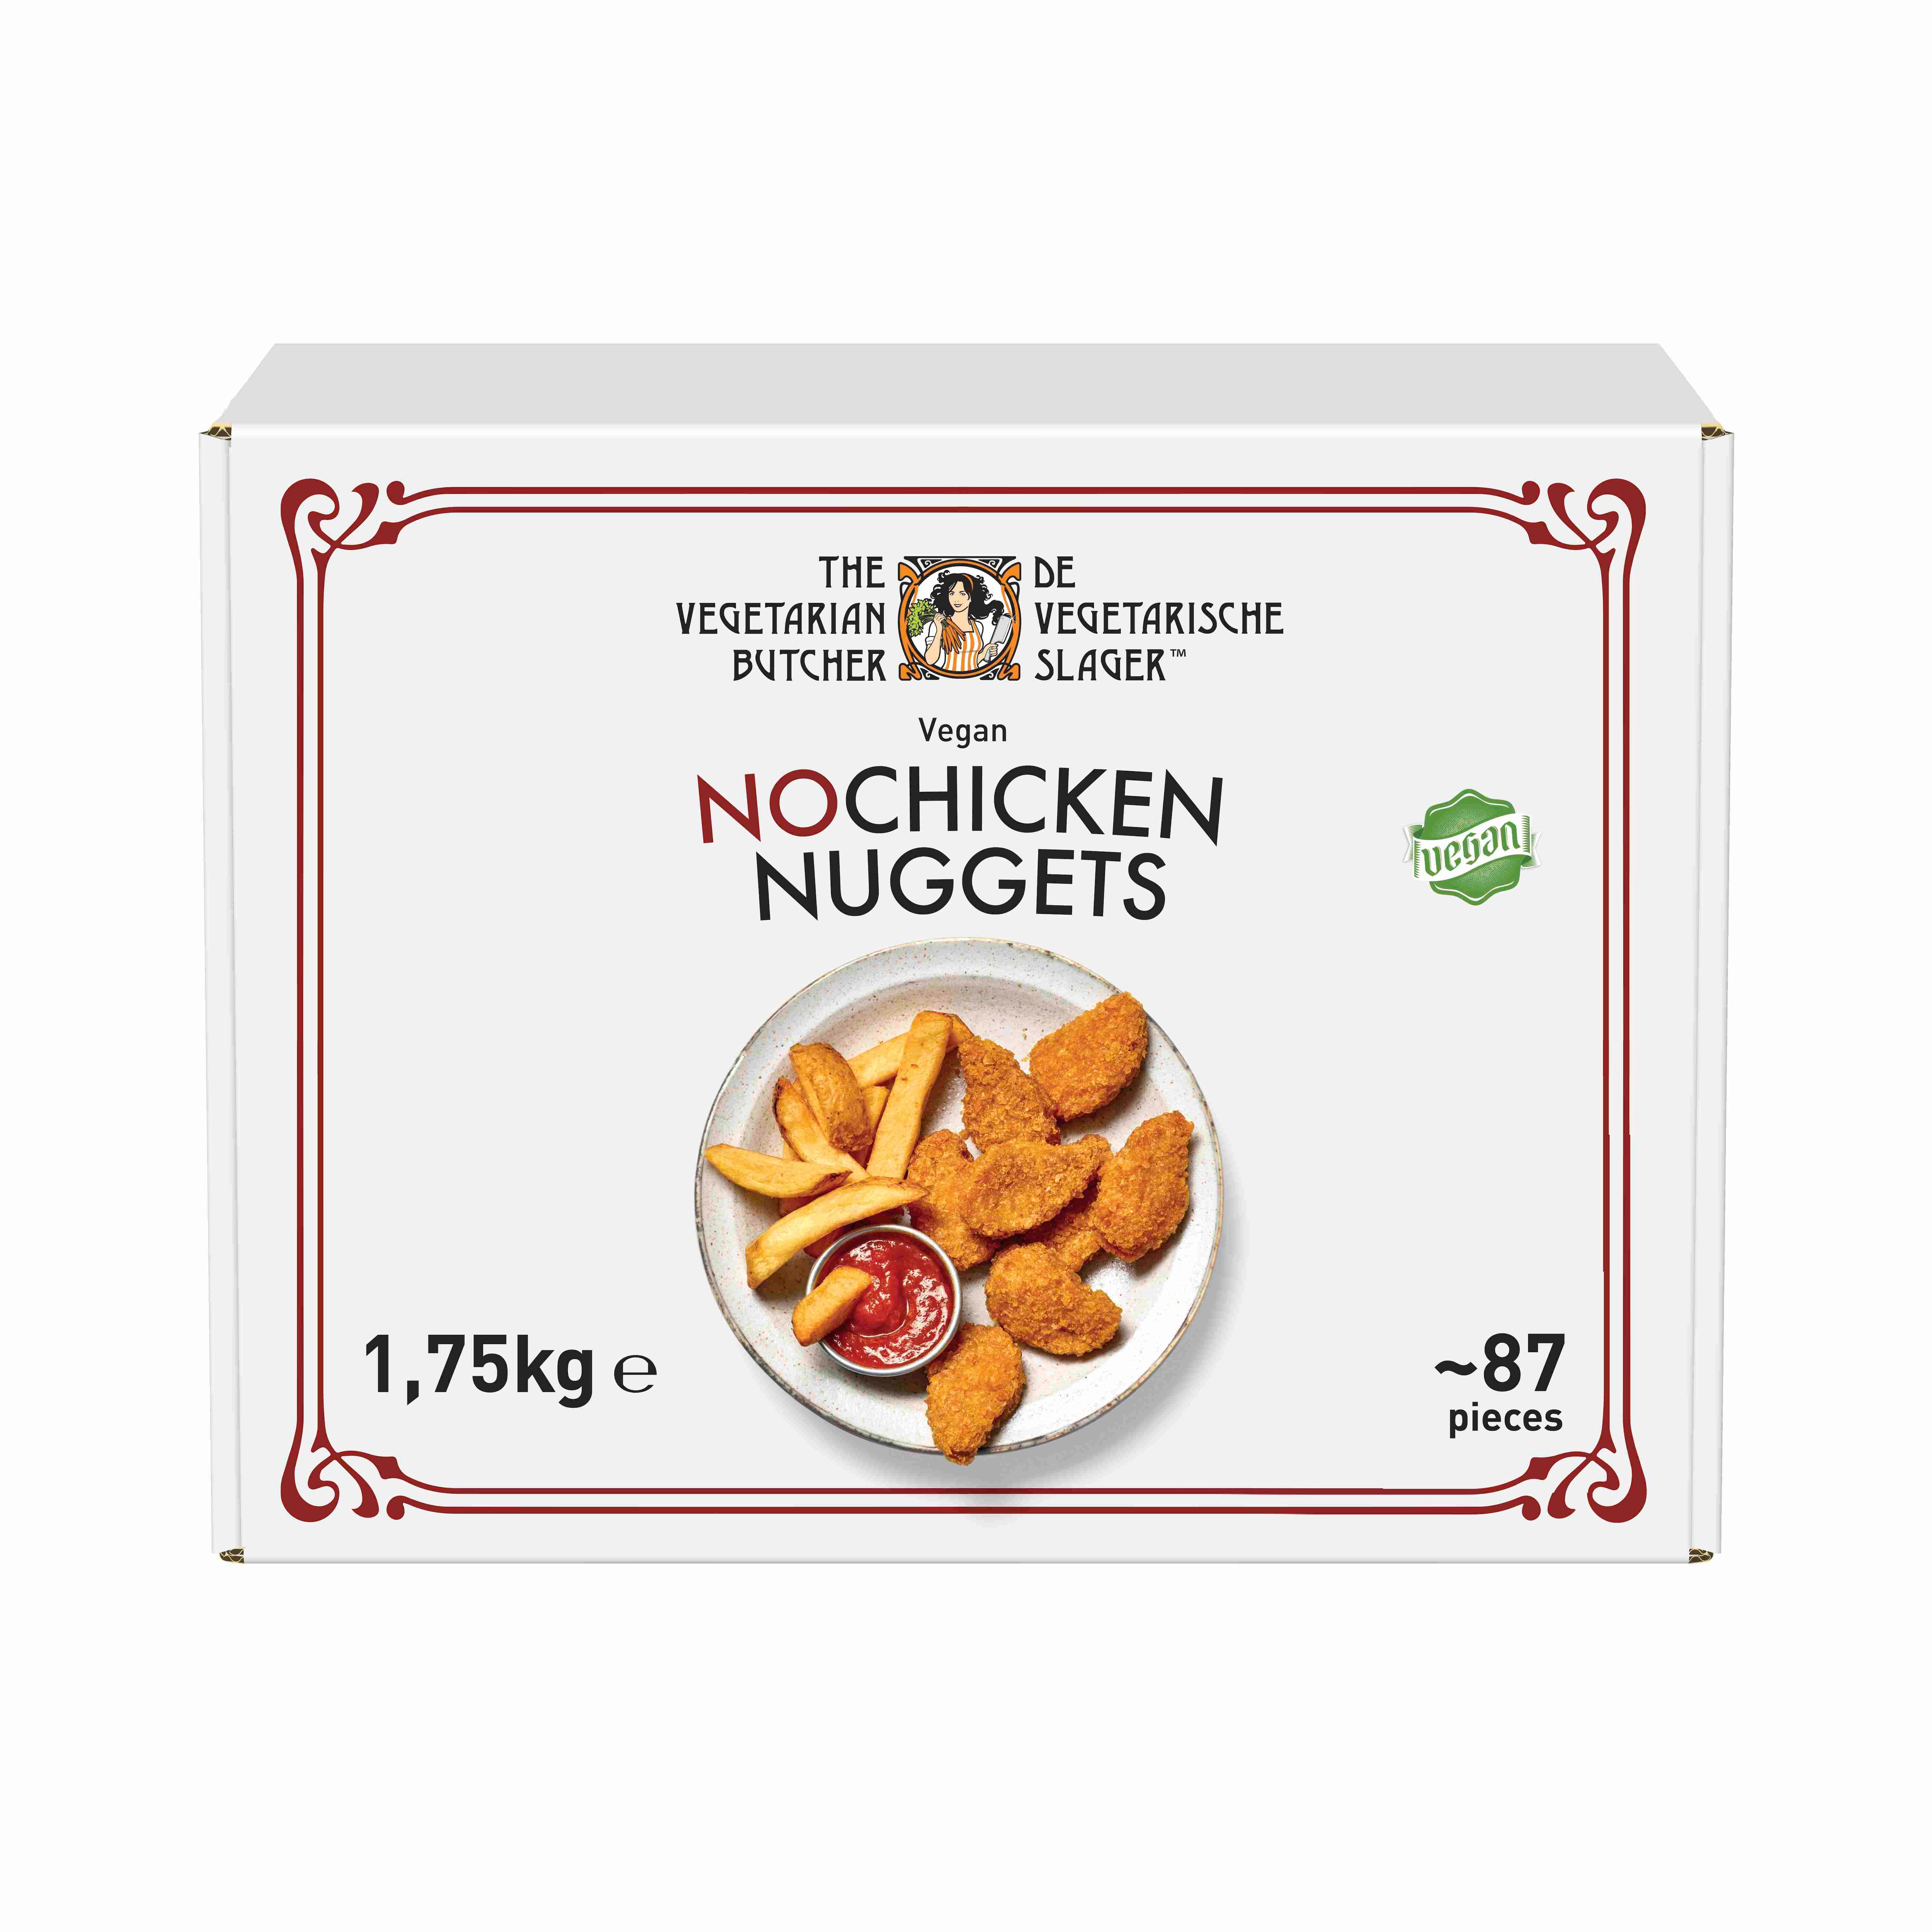 The Vegetarian Butcher NoChicken Nuggets 1,75 kg - Προϊόντα φυτικής προέλευσης με γεύση, μαγείρεμα, υφή και αίσθηση σαν το κρέας.